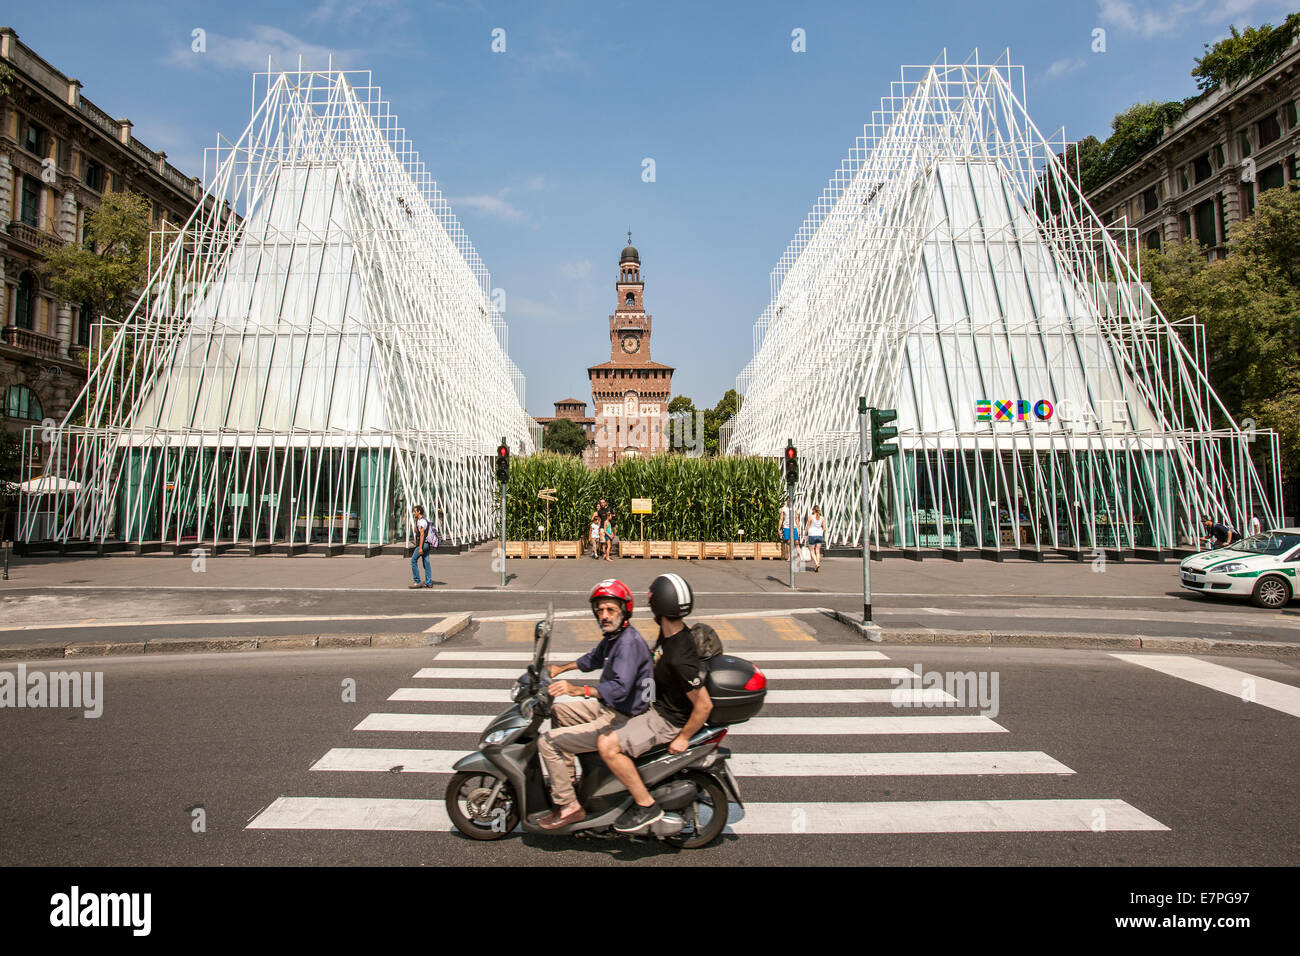 Milán, la Expo 2015, EXPOGATE, feria, Exposición Universal, el castillo Sforzesco, GATE, Infopoint, cruce de peatones, motociclistas Foto de stock